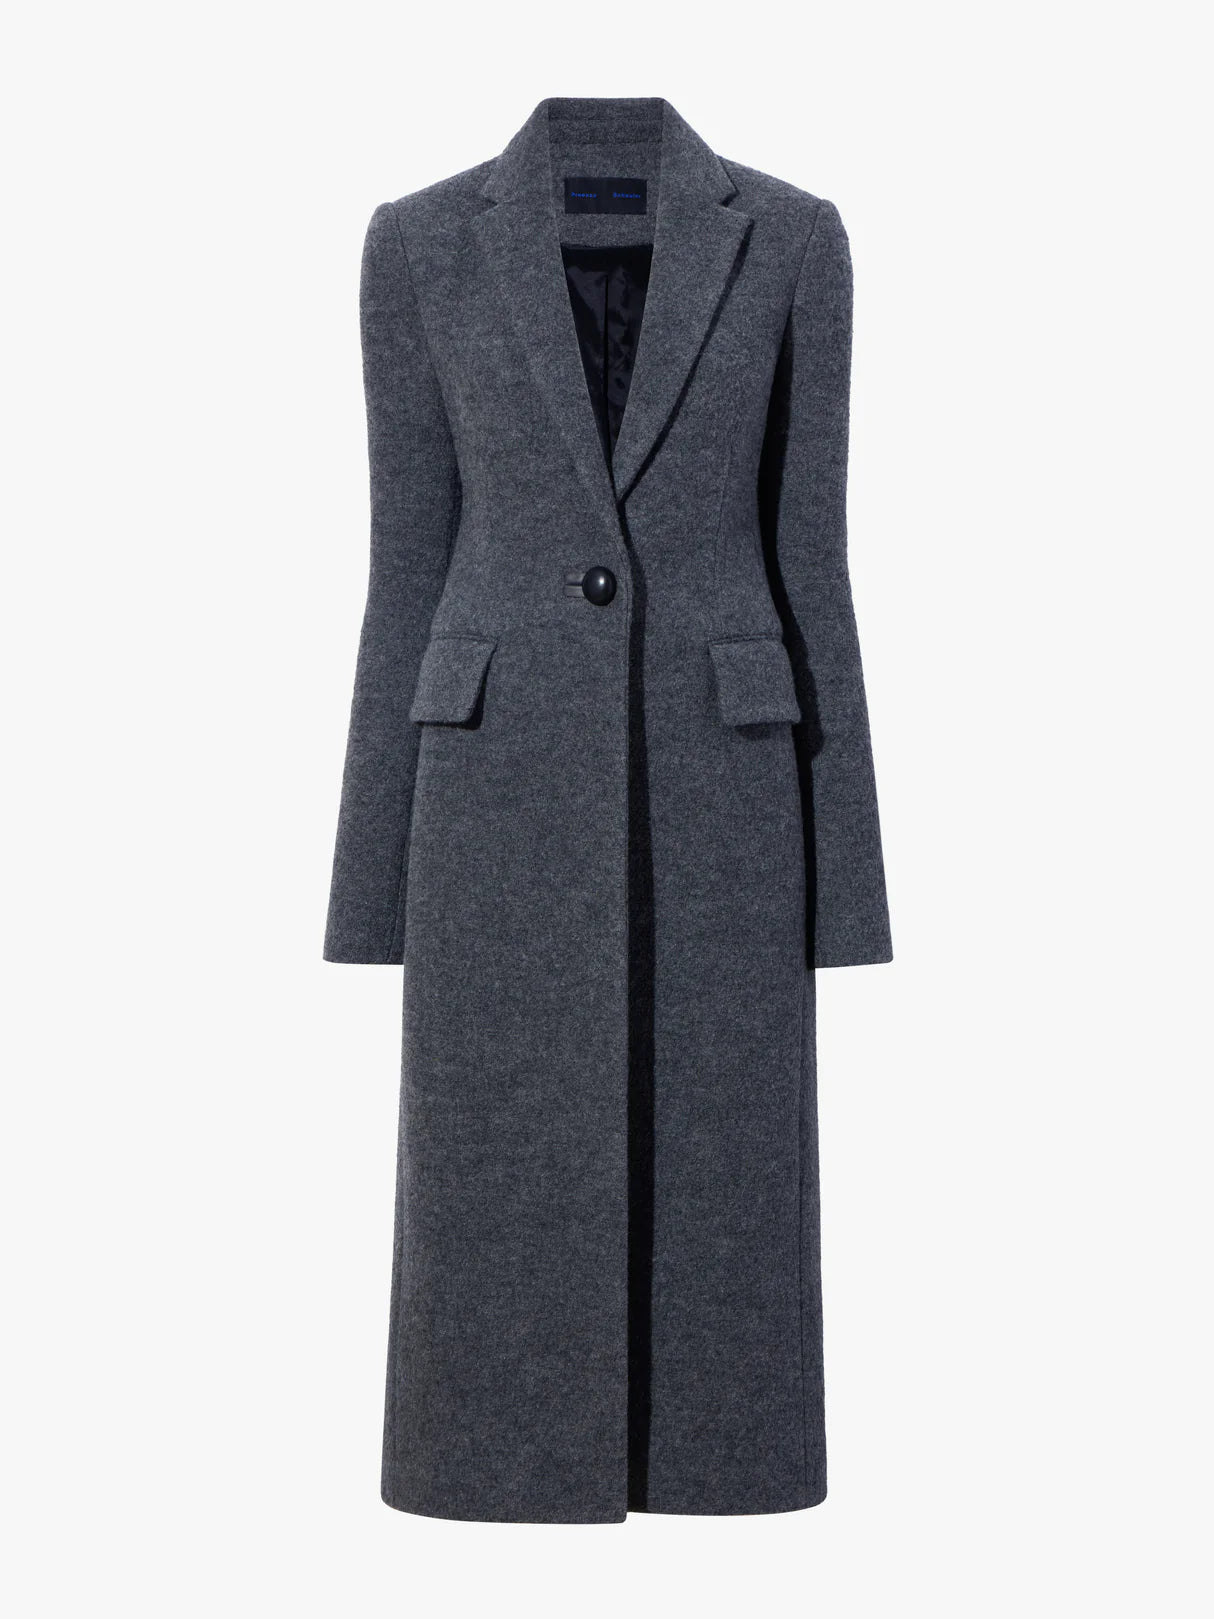 Wool Jersey Coat - Grey Melange